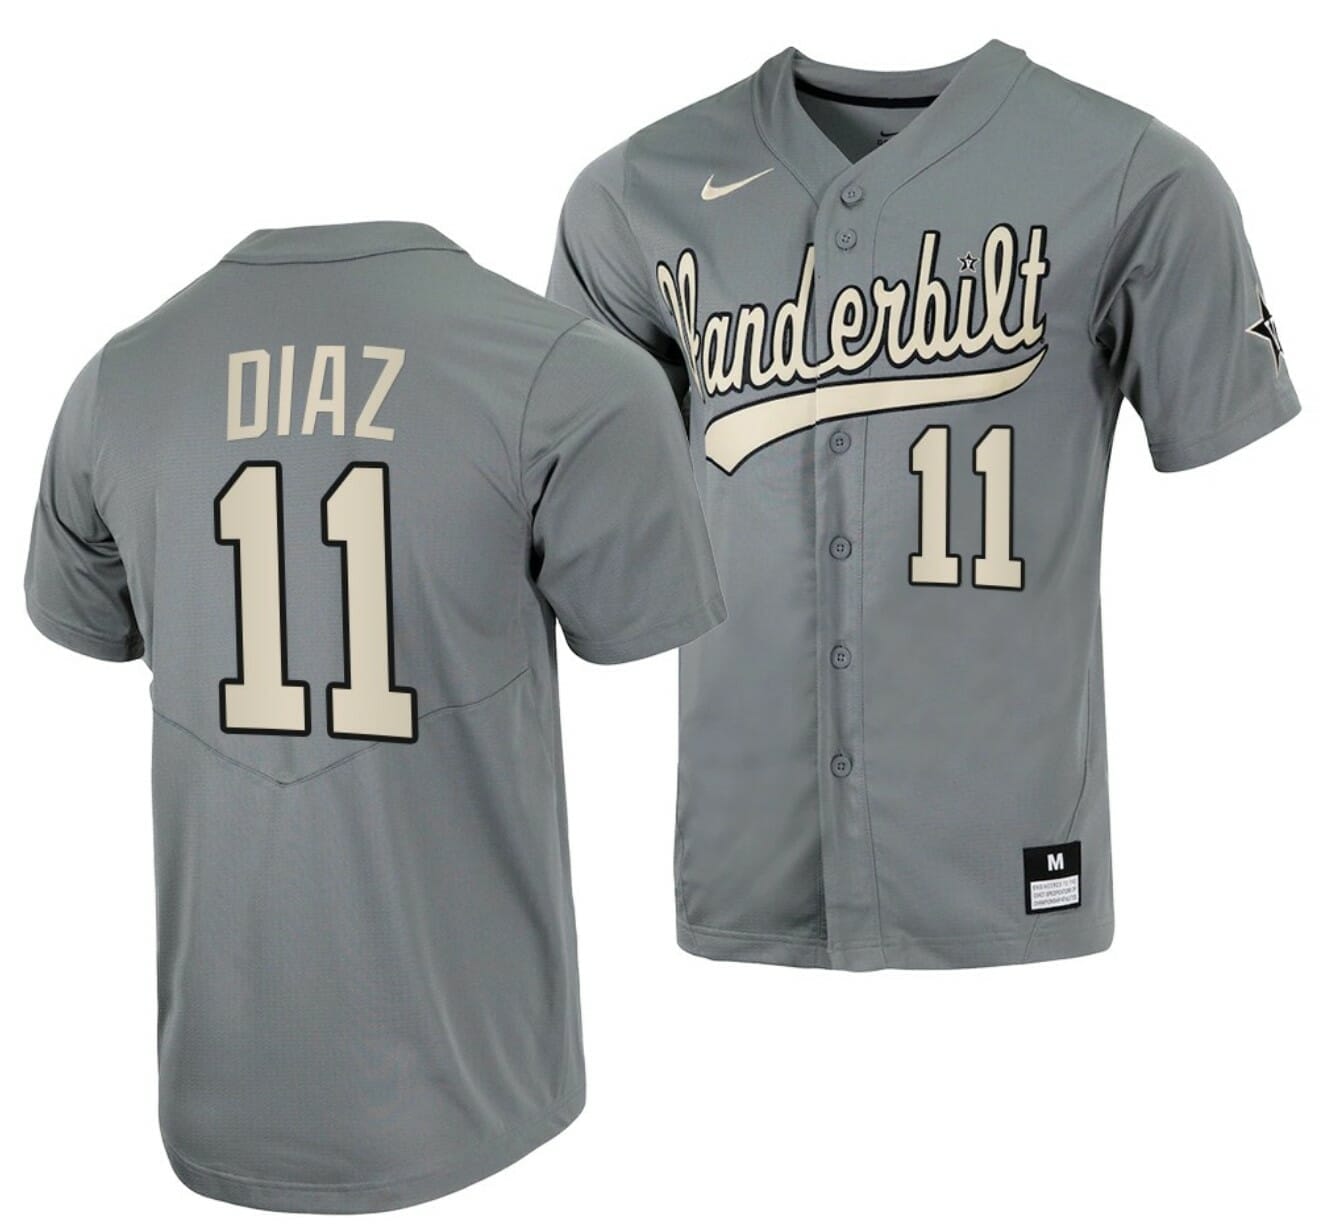 NCAA Baseball Jersey Davis Diaz Vanderbilt Commodores College Full-Button Grey #11